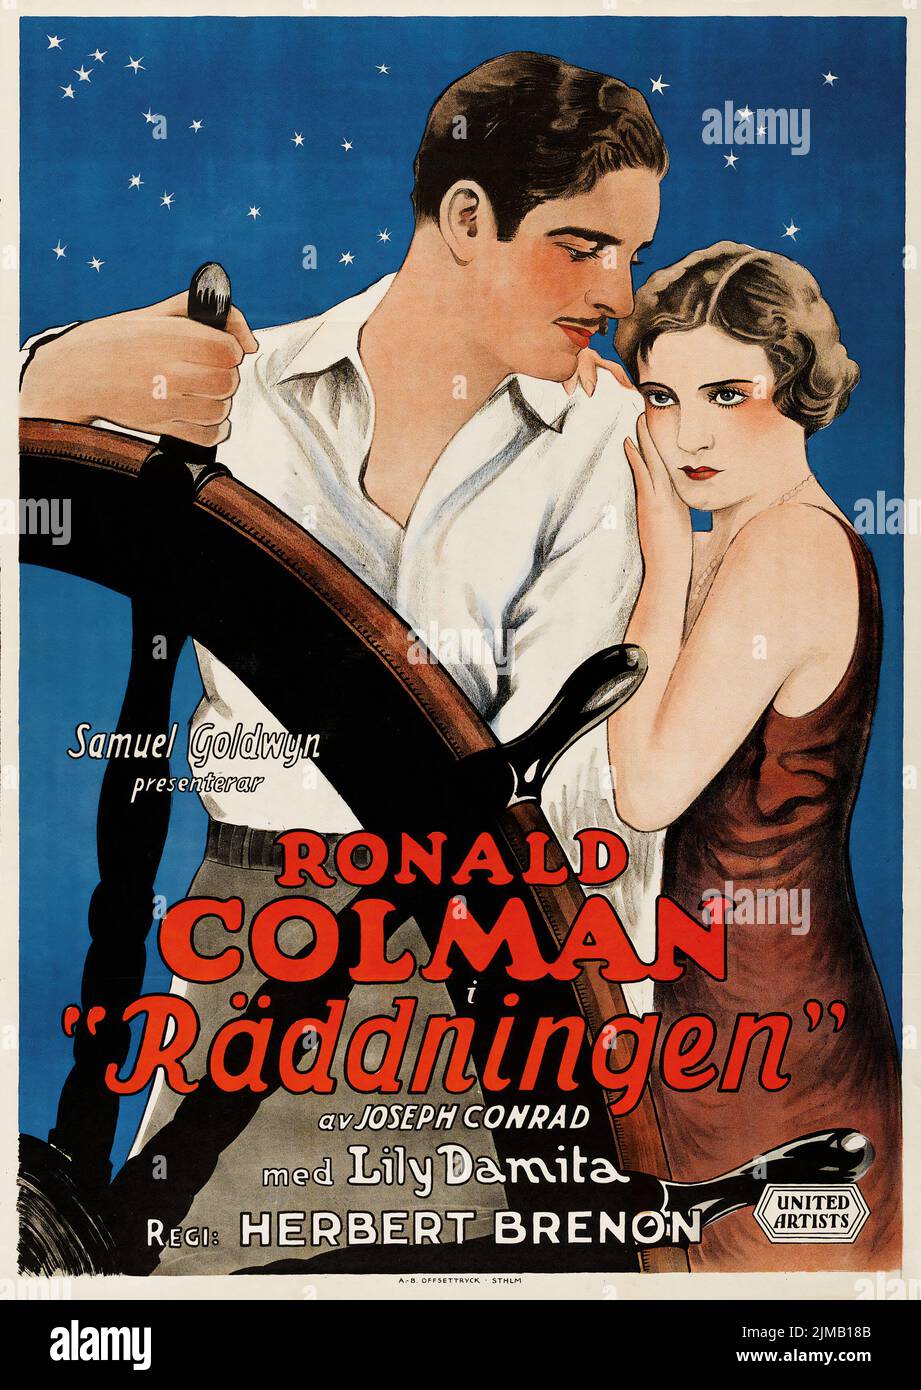 The Rescue (United Artists, 1929) Ronald Colman 'Räddningen' Swedish film poster - Eric Rohman artwork Stock Photo